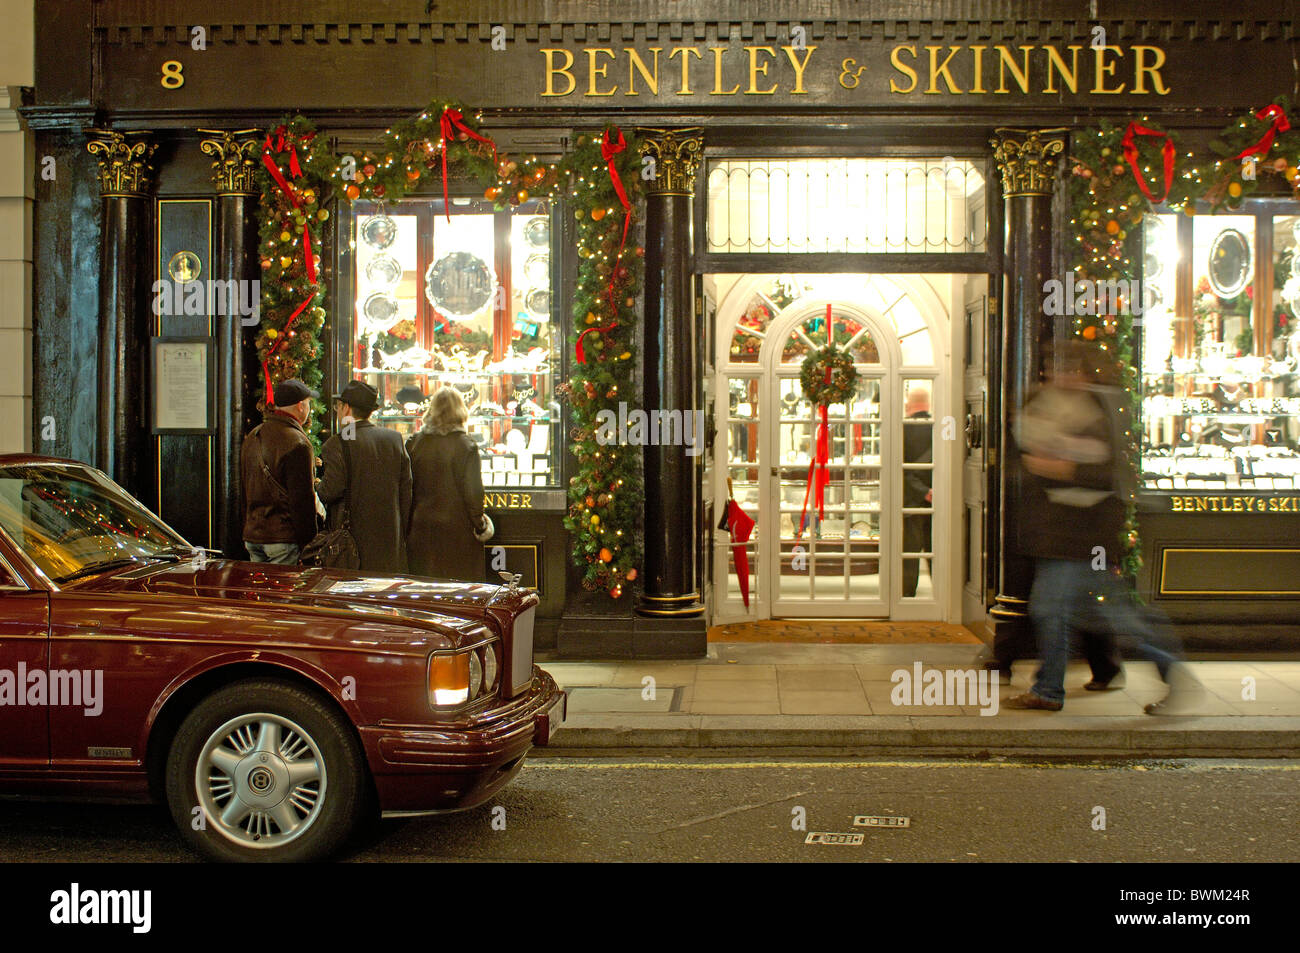 UK London Bentley Skinner Gebäude neue Bond Street Mayfair Großbritannien Europa Großbritannien England Europ Stockfoto